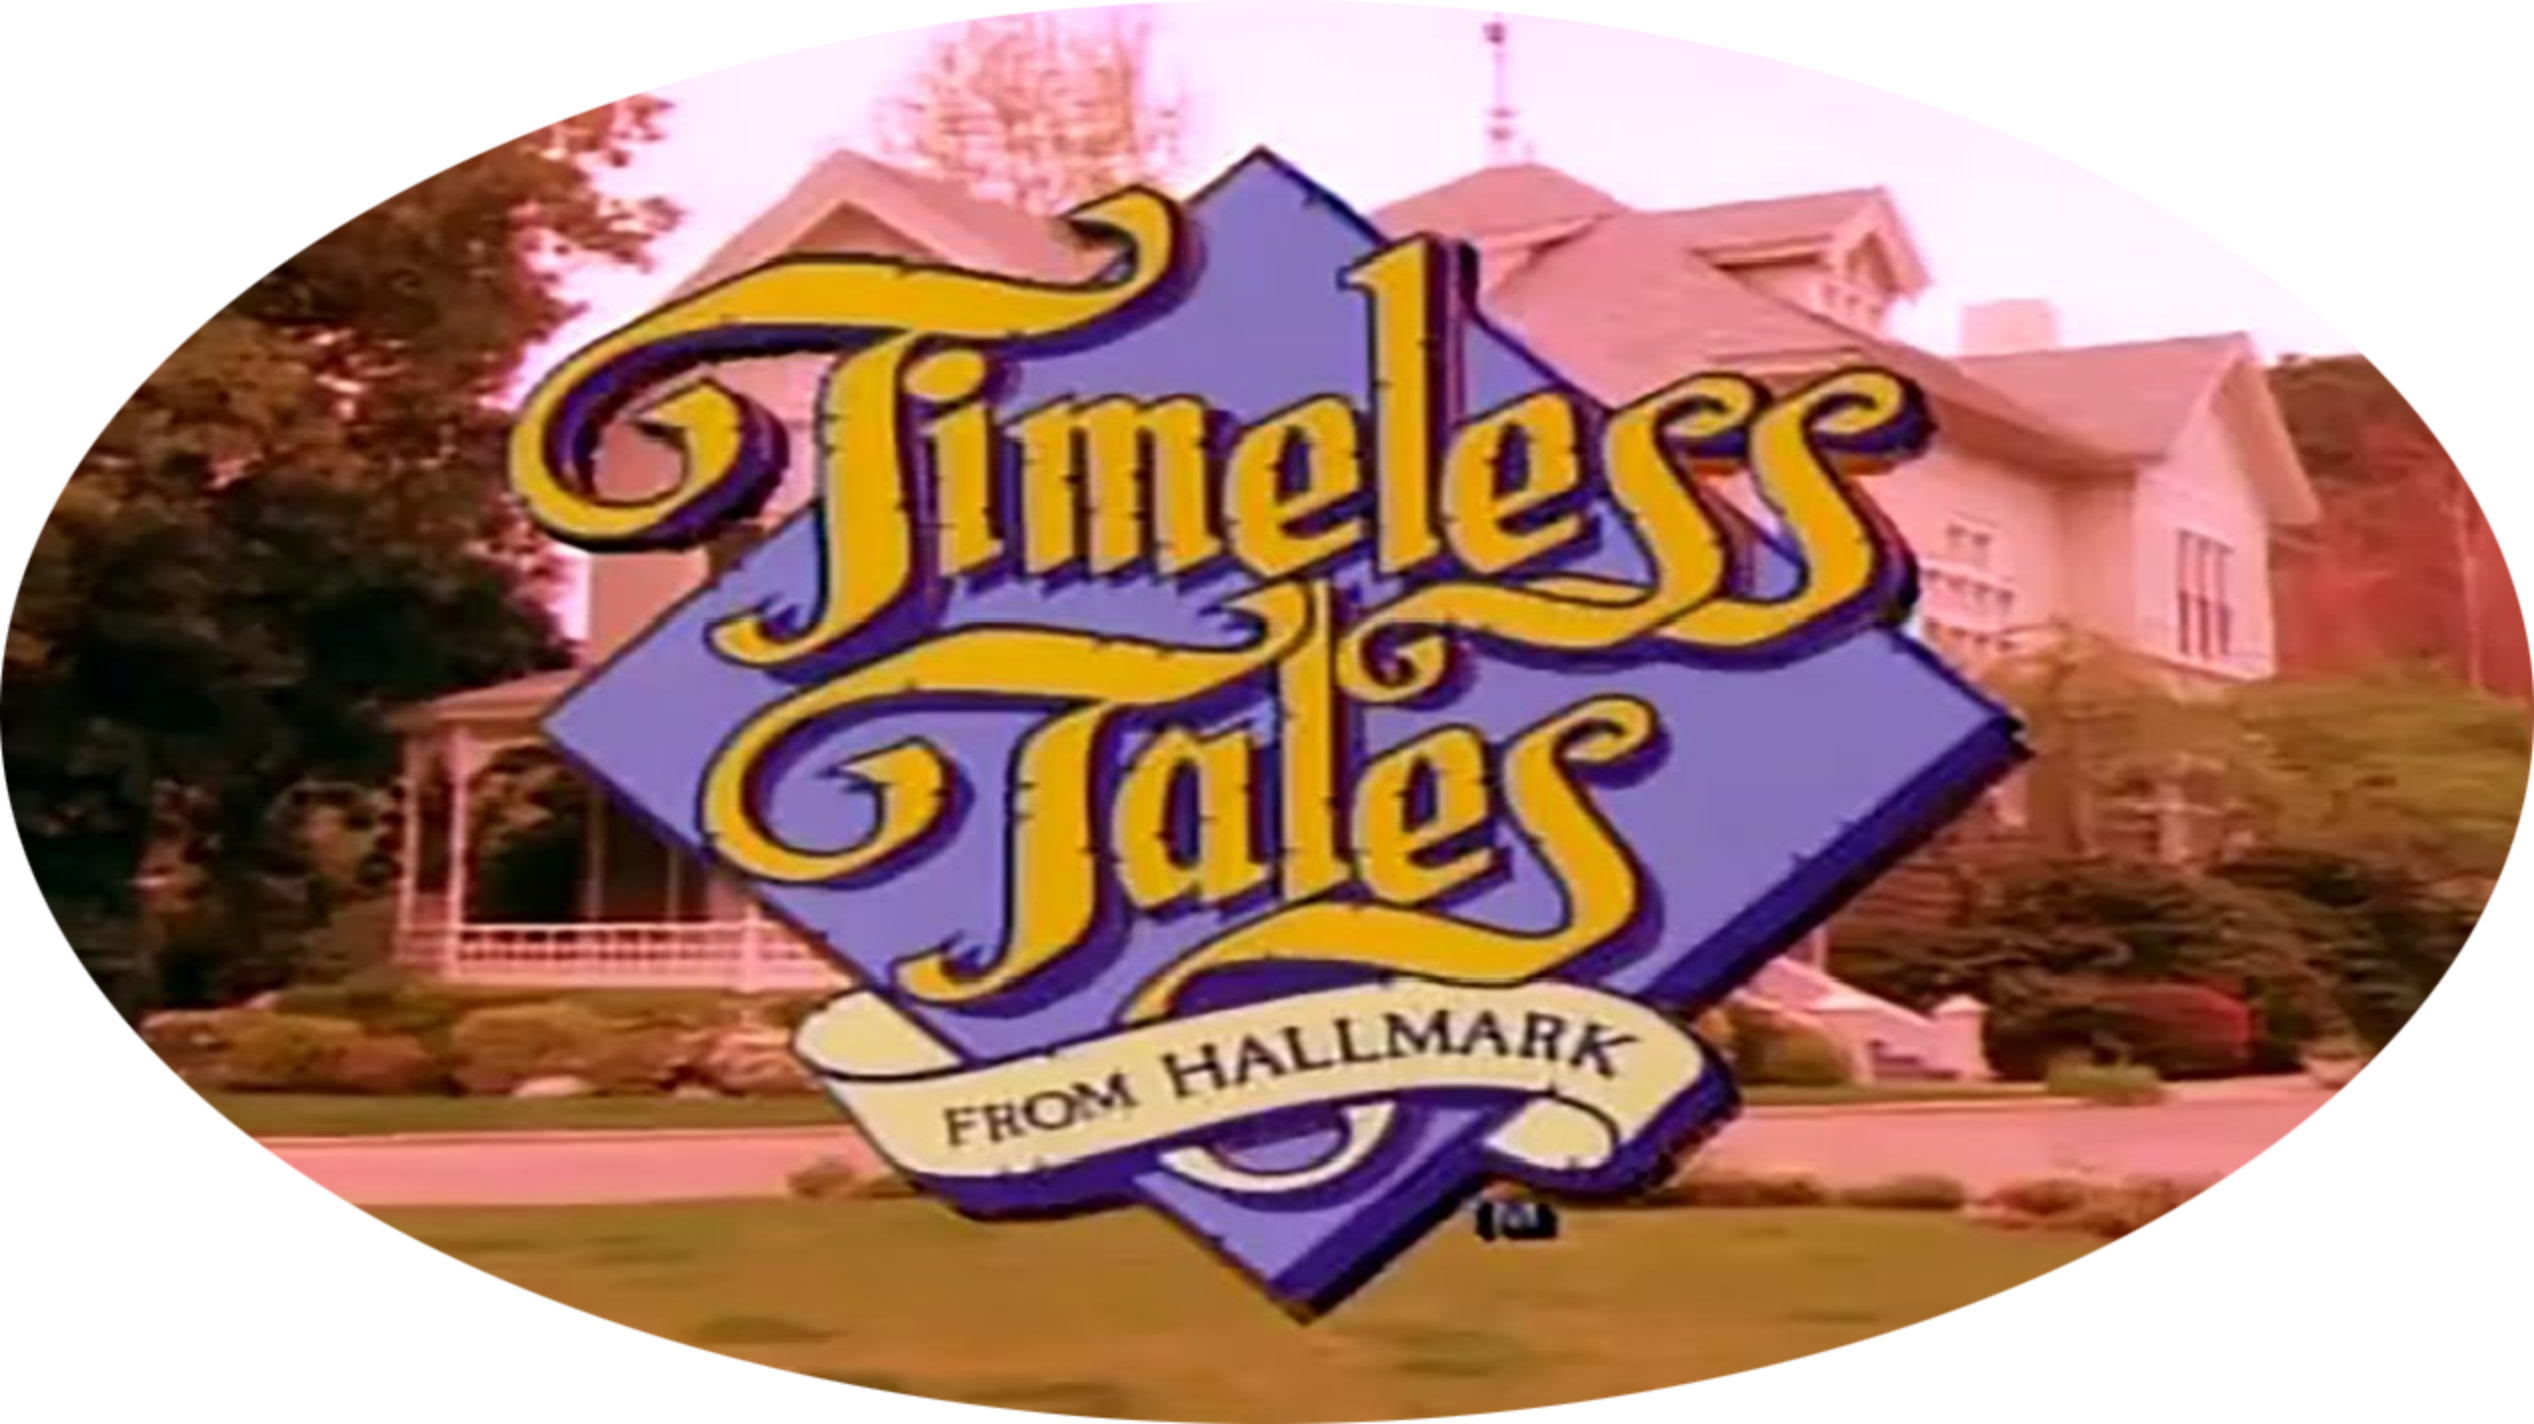 Timeless Tales from Hallmark 